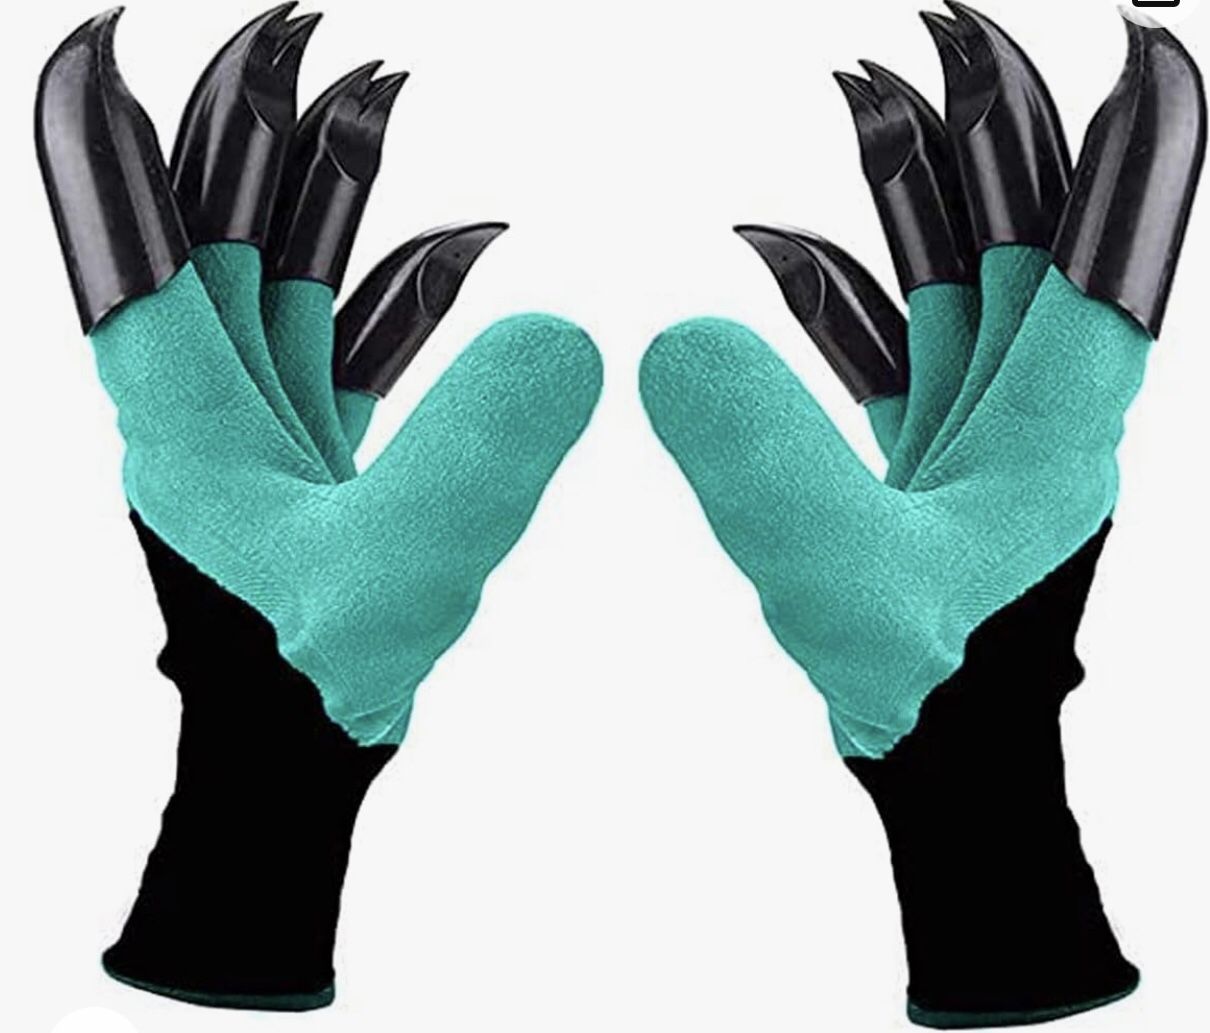 Two Pairs Finger Digger Garden Gloves. Best Seller